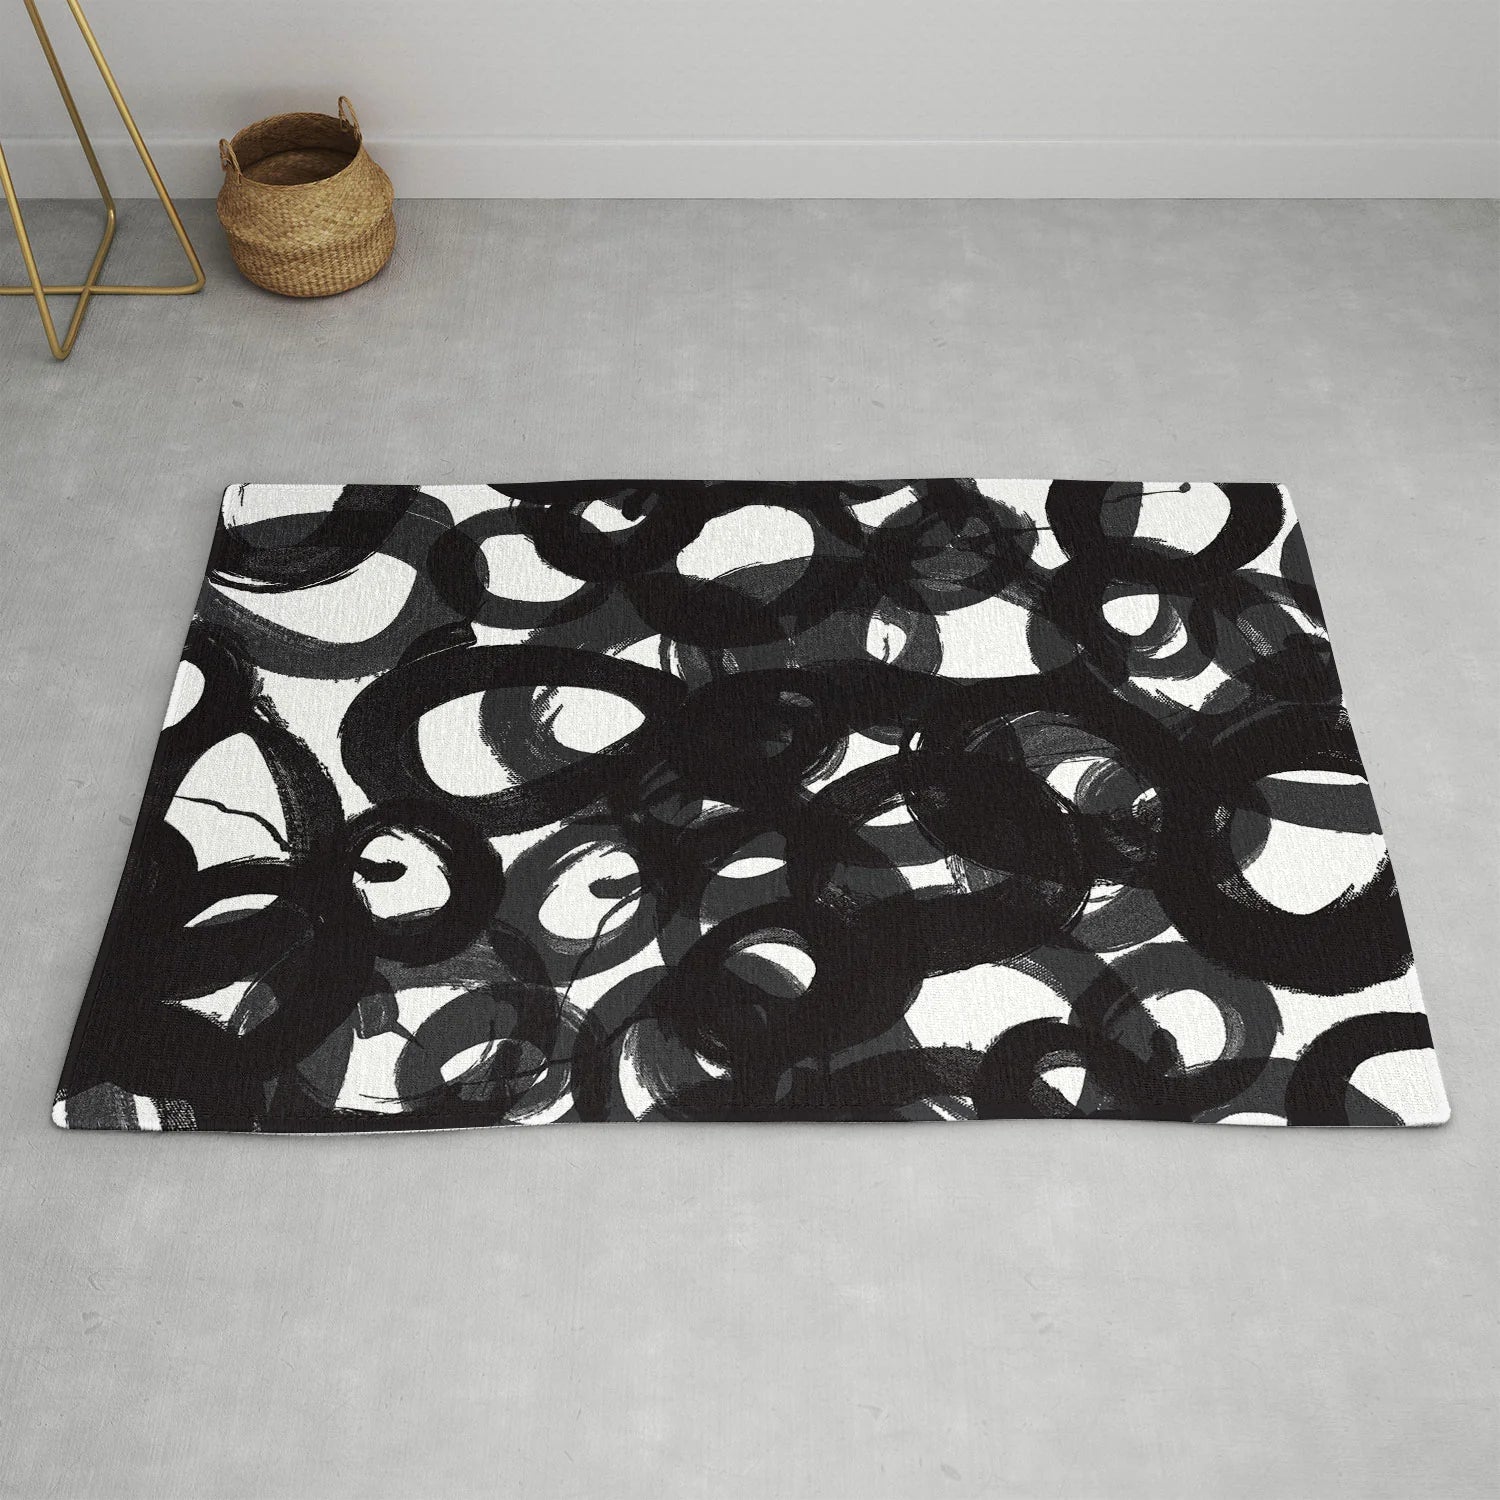 "black circles" area rug